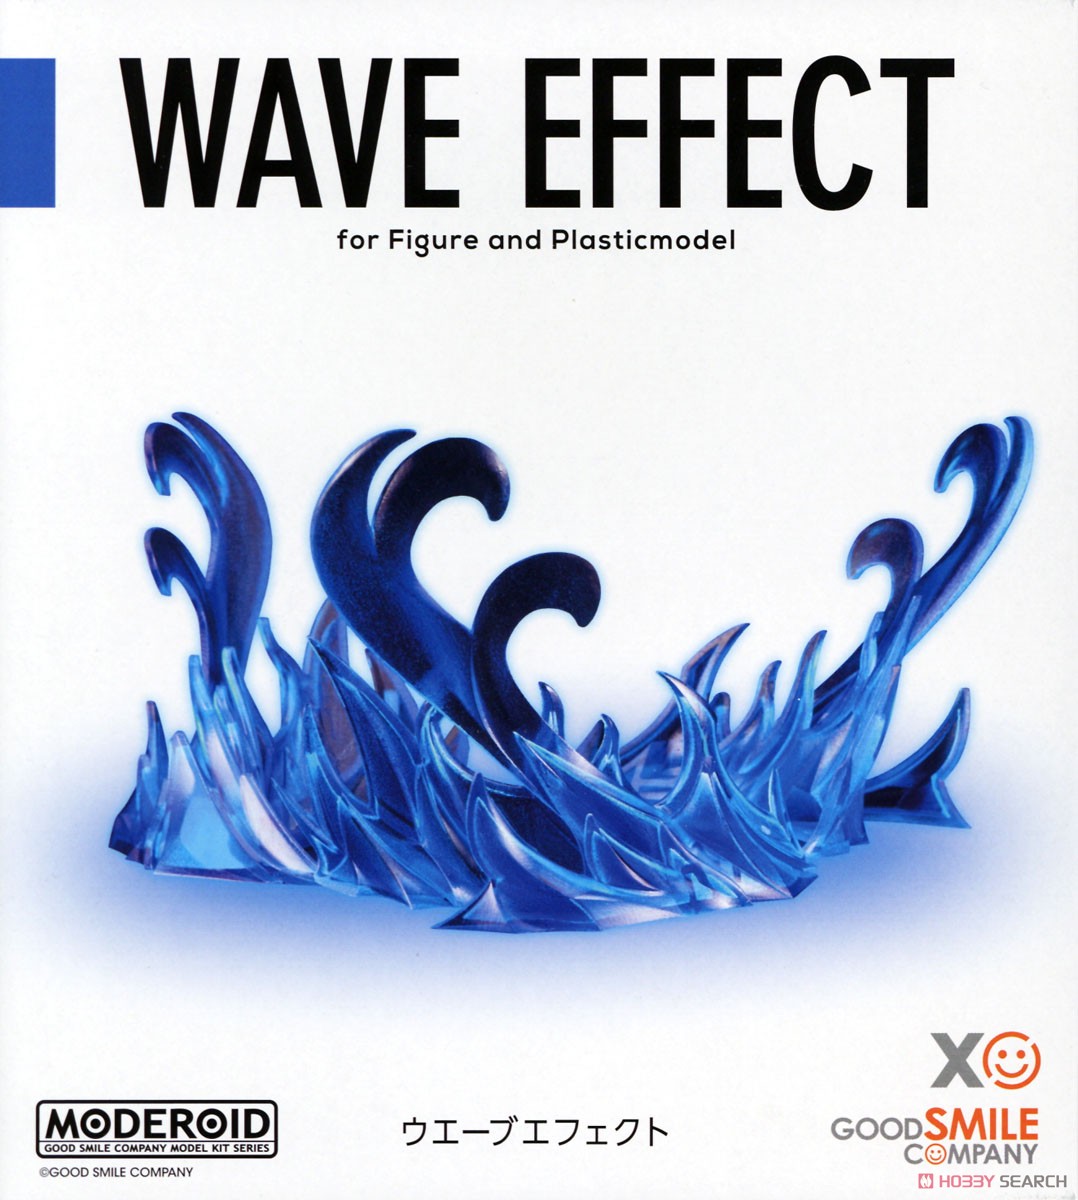 MODEROID Wave Effect (Plastic model) Package1